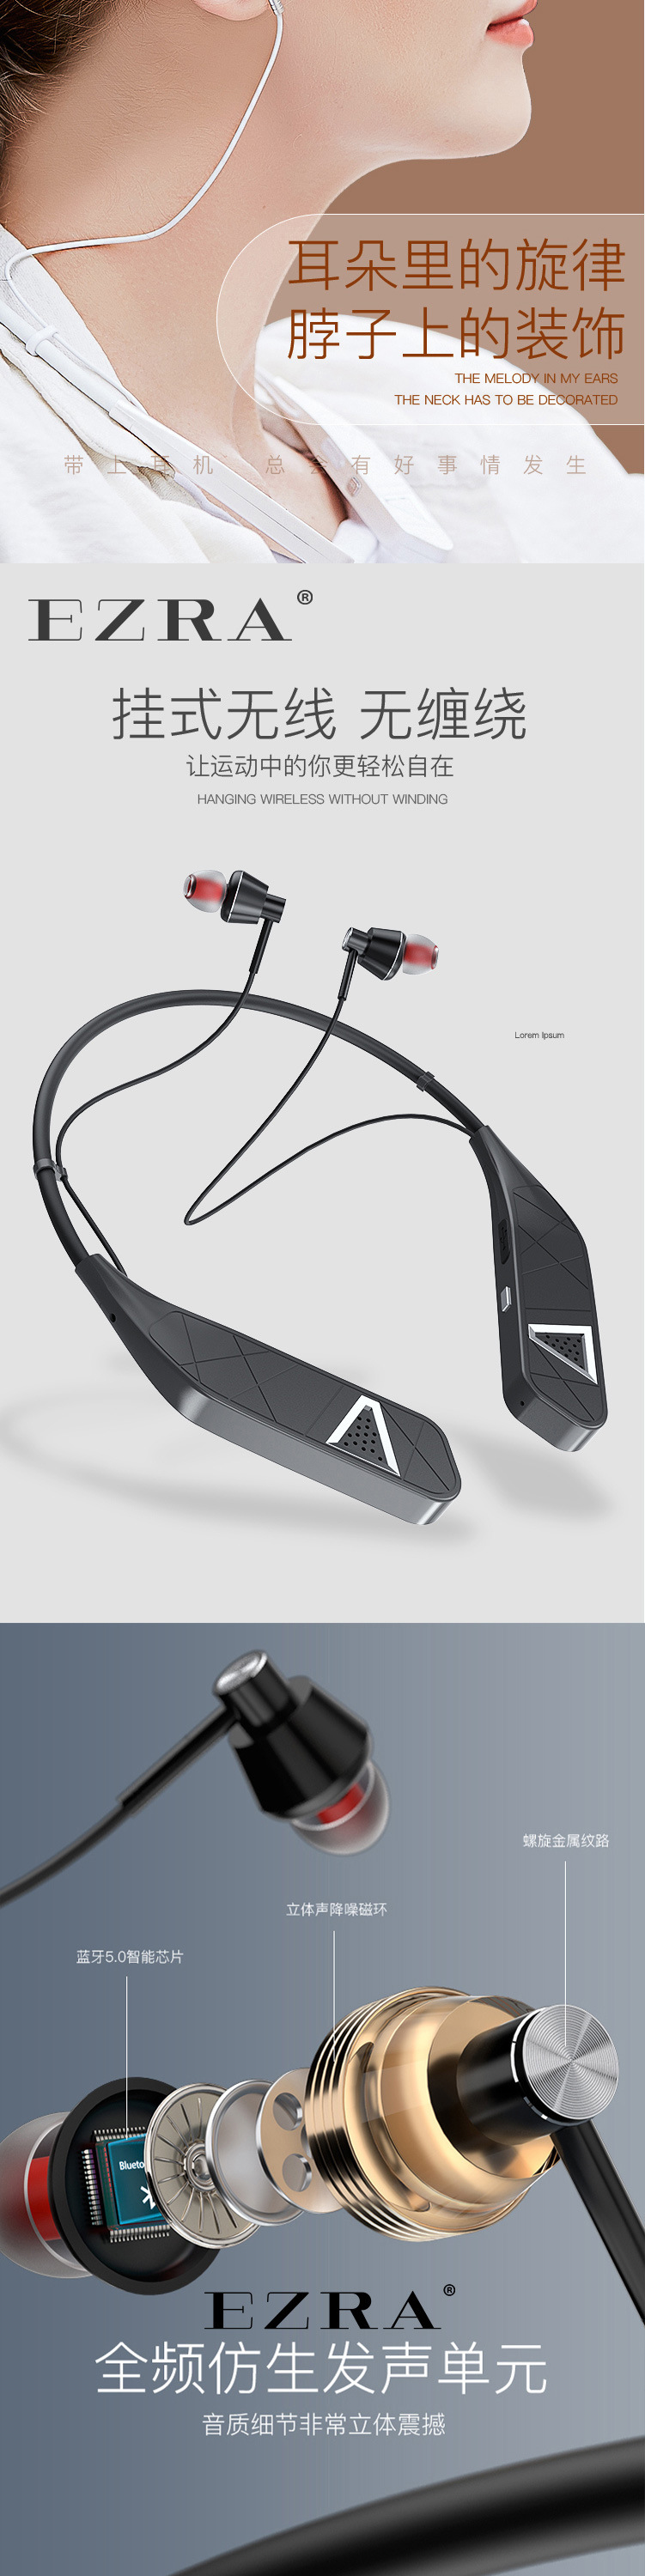 EZRA新款BW12颈戴式无线蓝牙耳机音箱耳机二合一超强续航挂脖运动耳机-s详情6